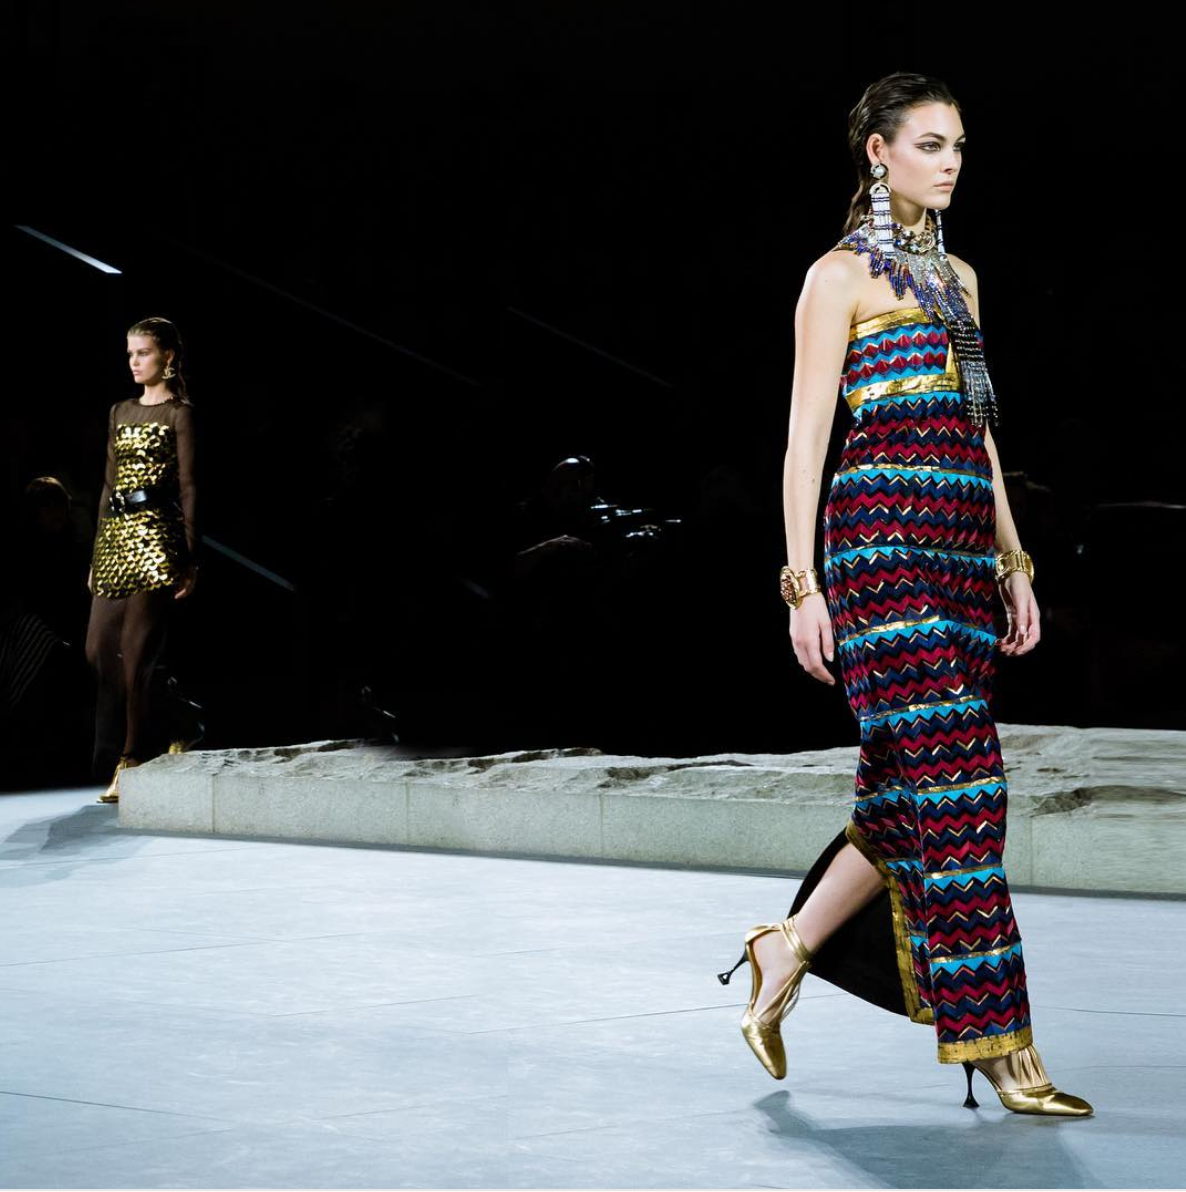 Blog: Walk Like an Egyptian? How Modern Fashion Appropriates Antiquity